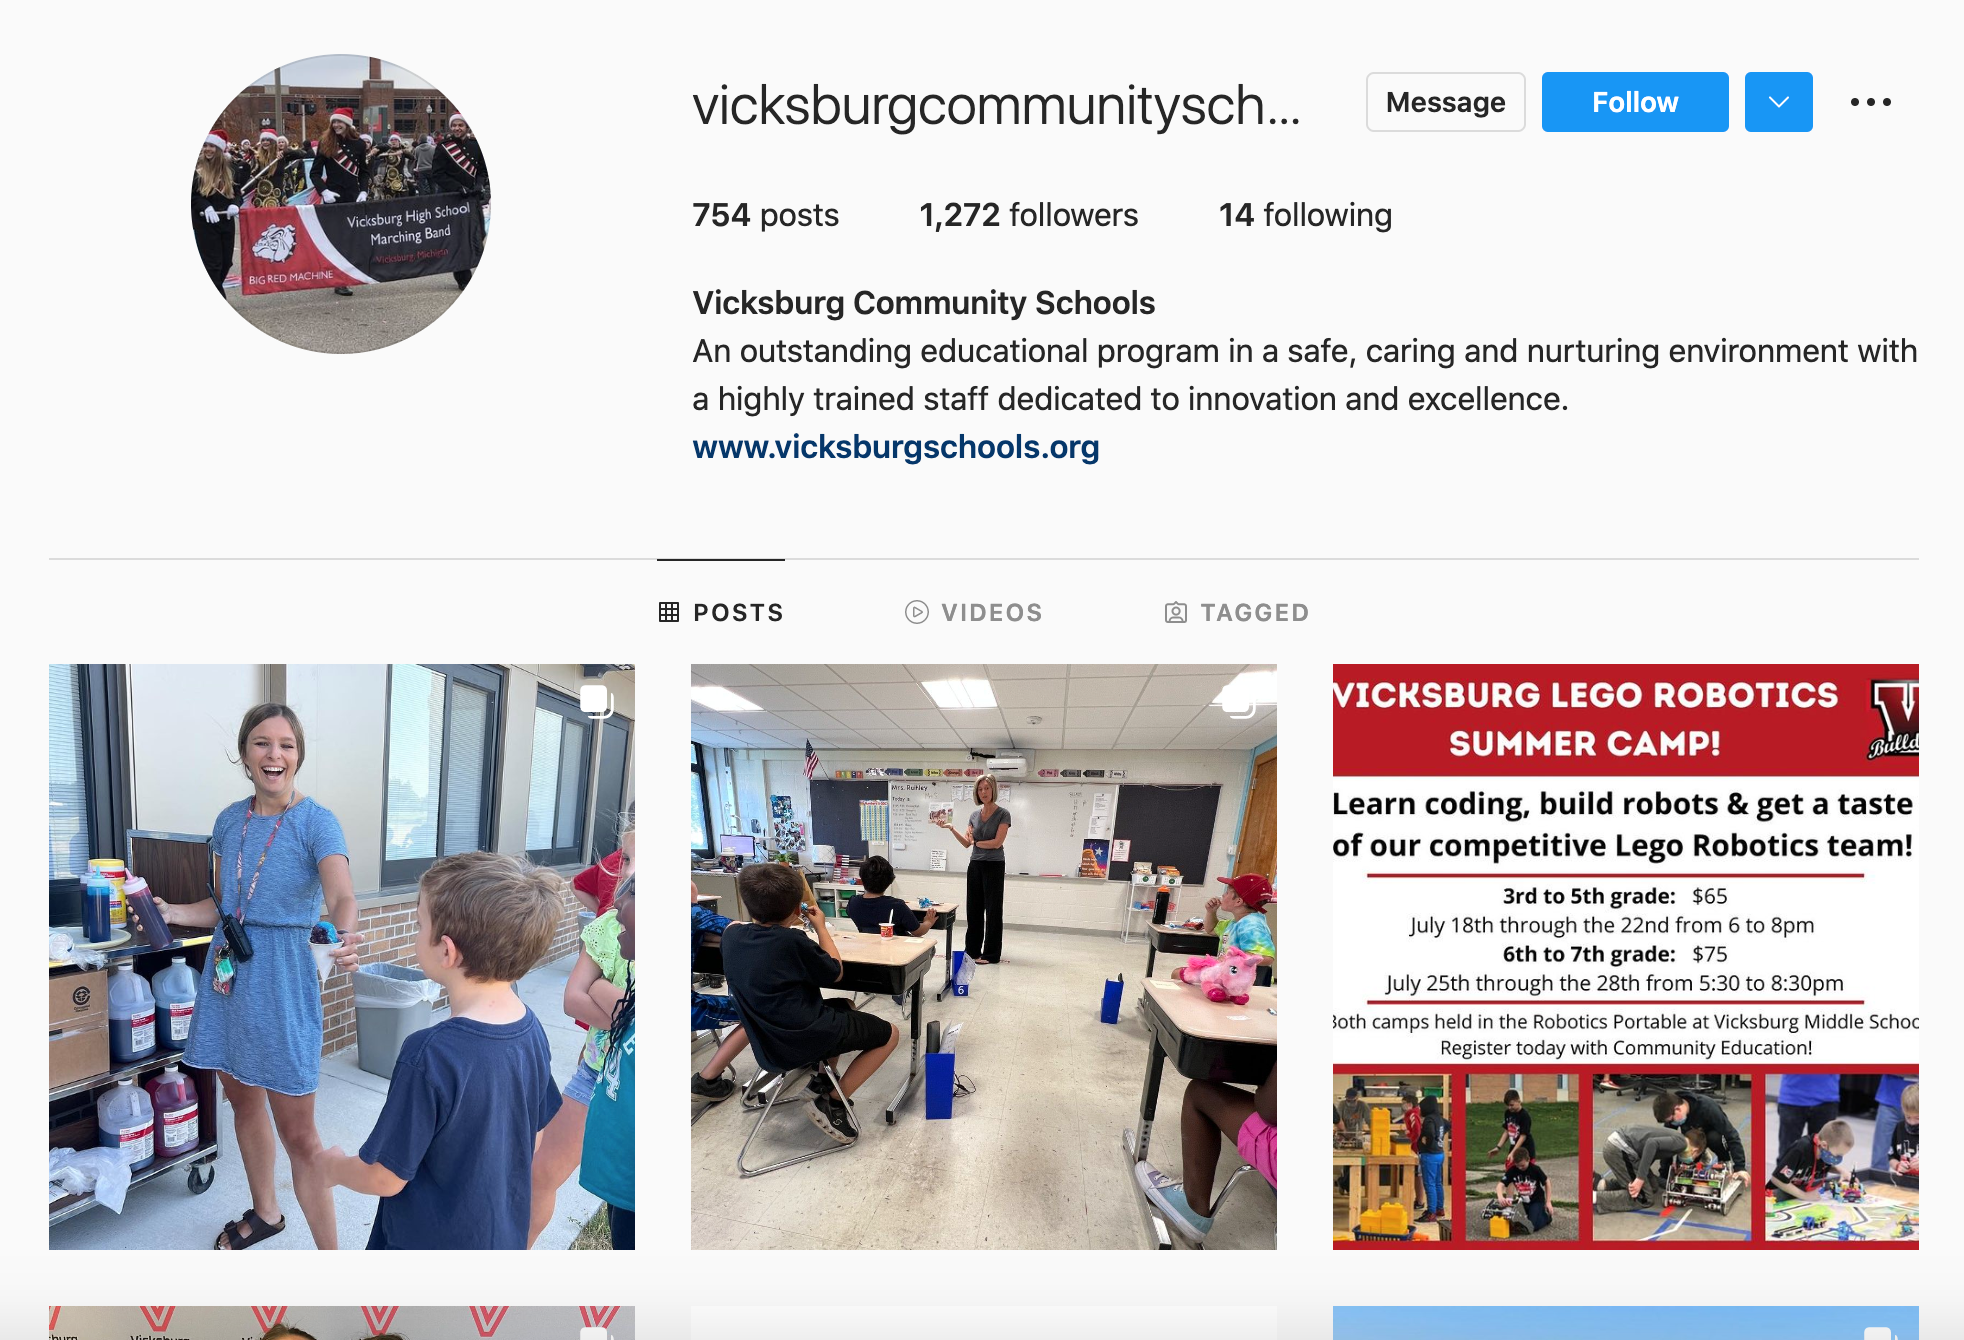 Instagram feed of vicksburg community schools